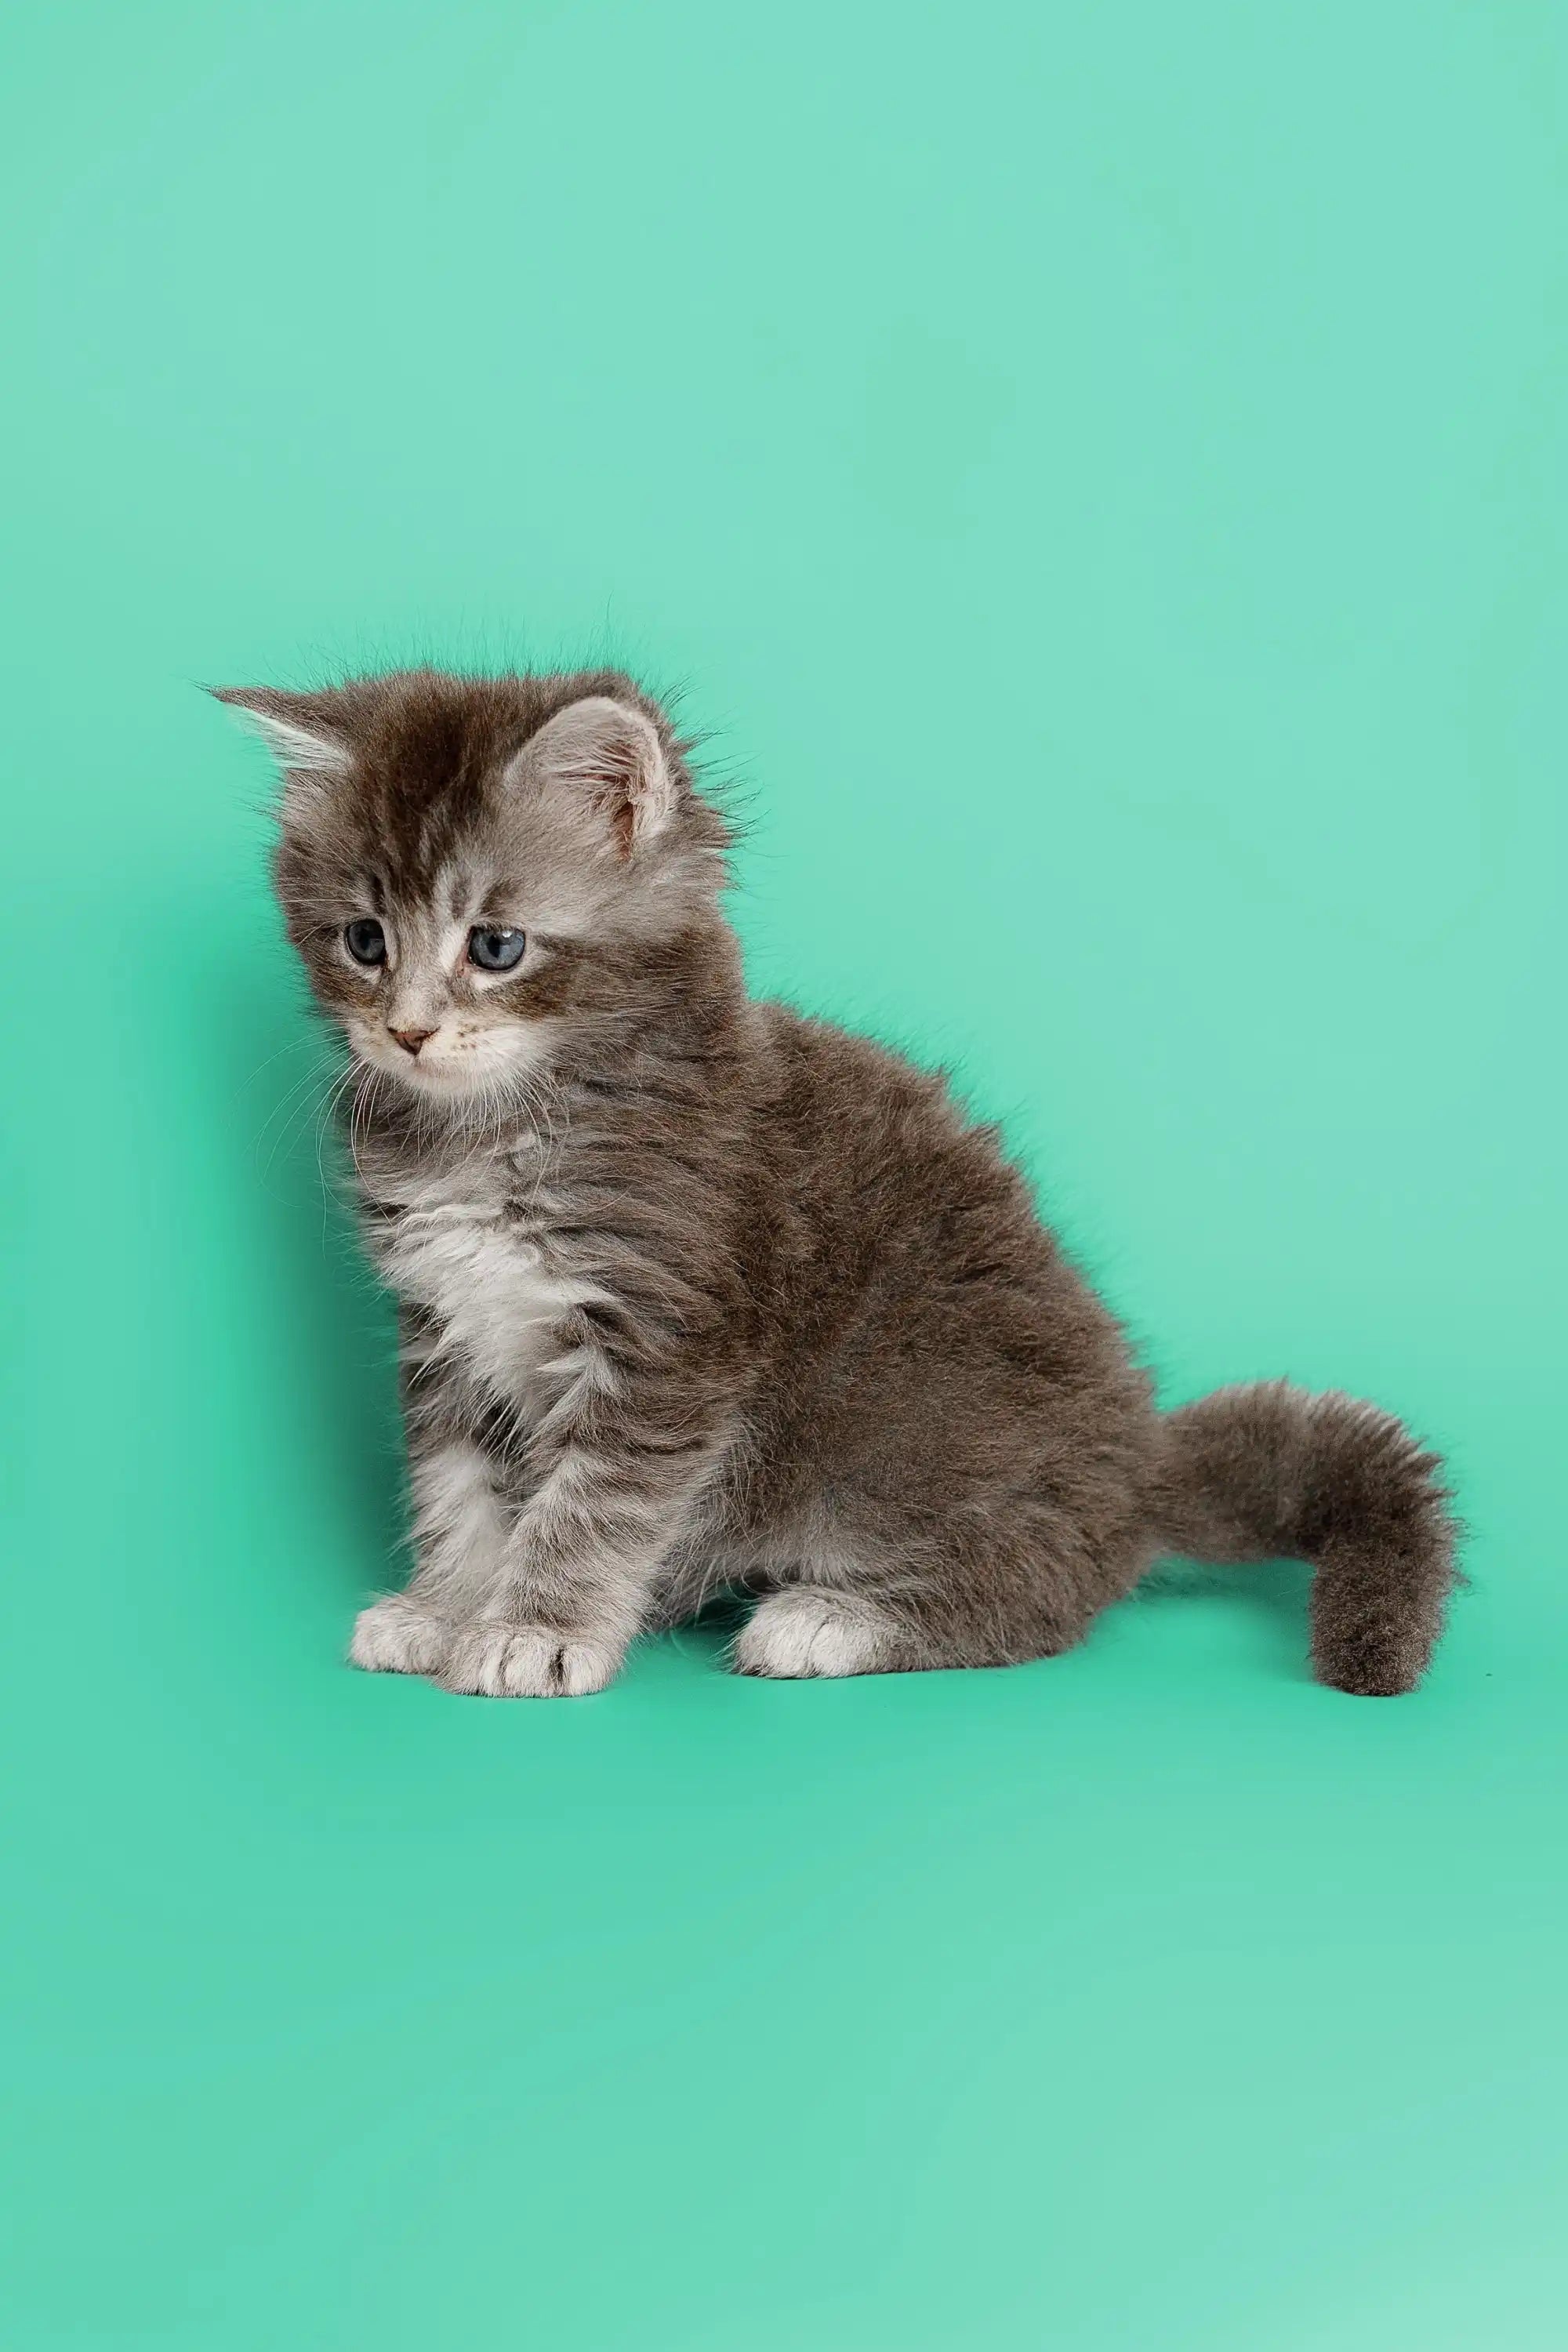 Maine Coon Kittens for Sale Assol | Kitten